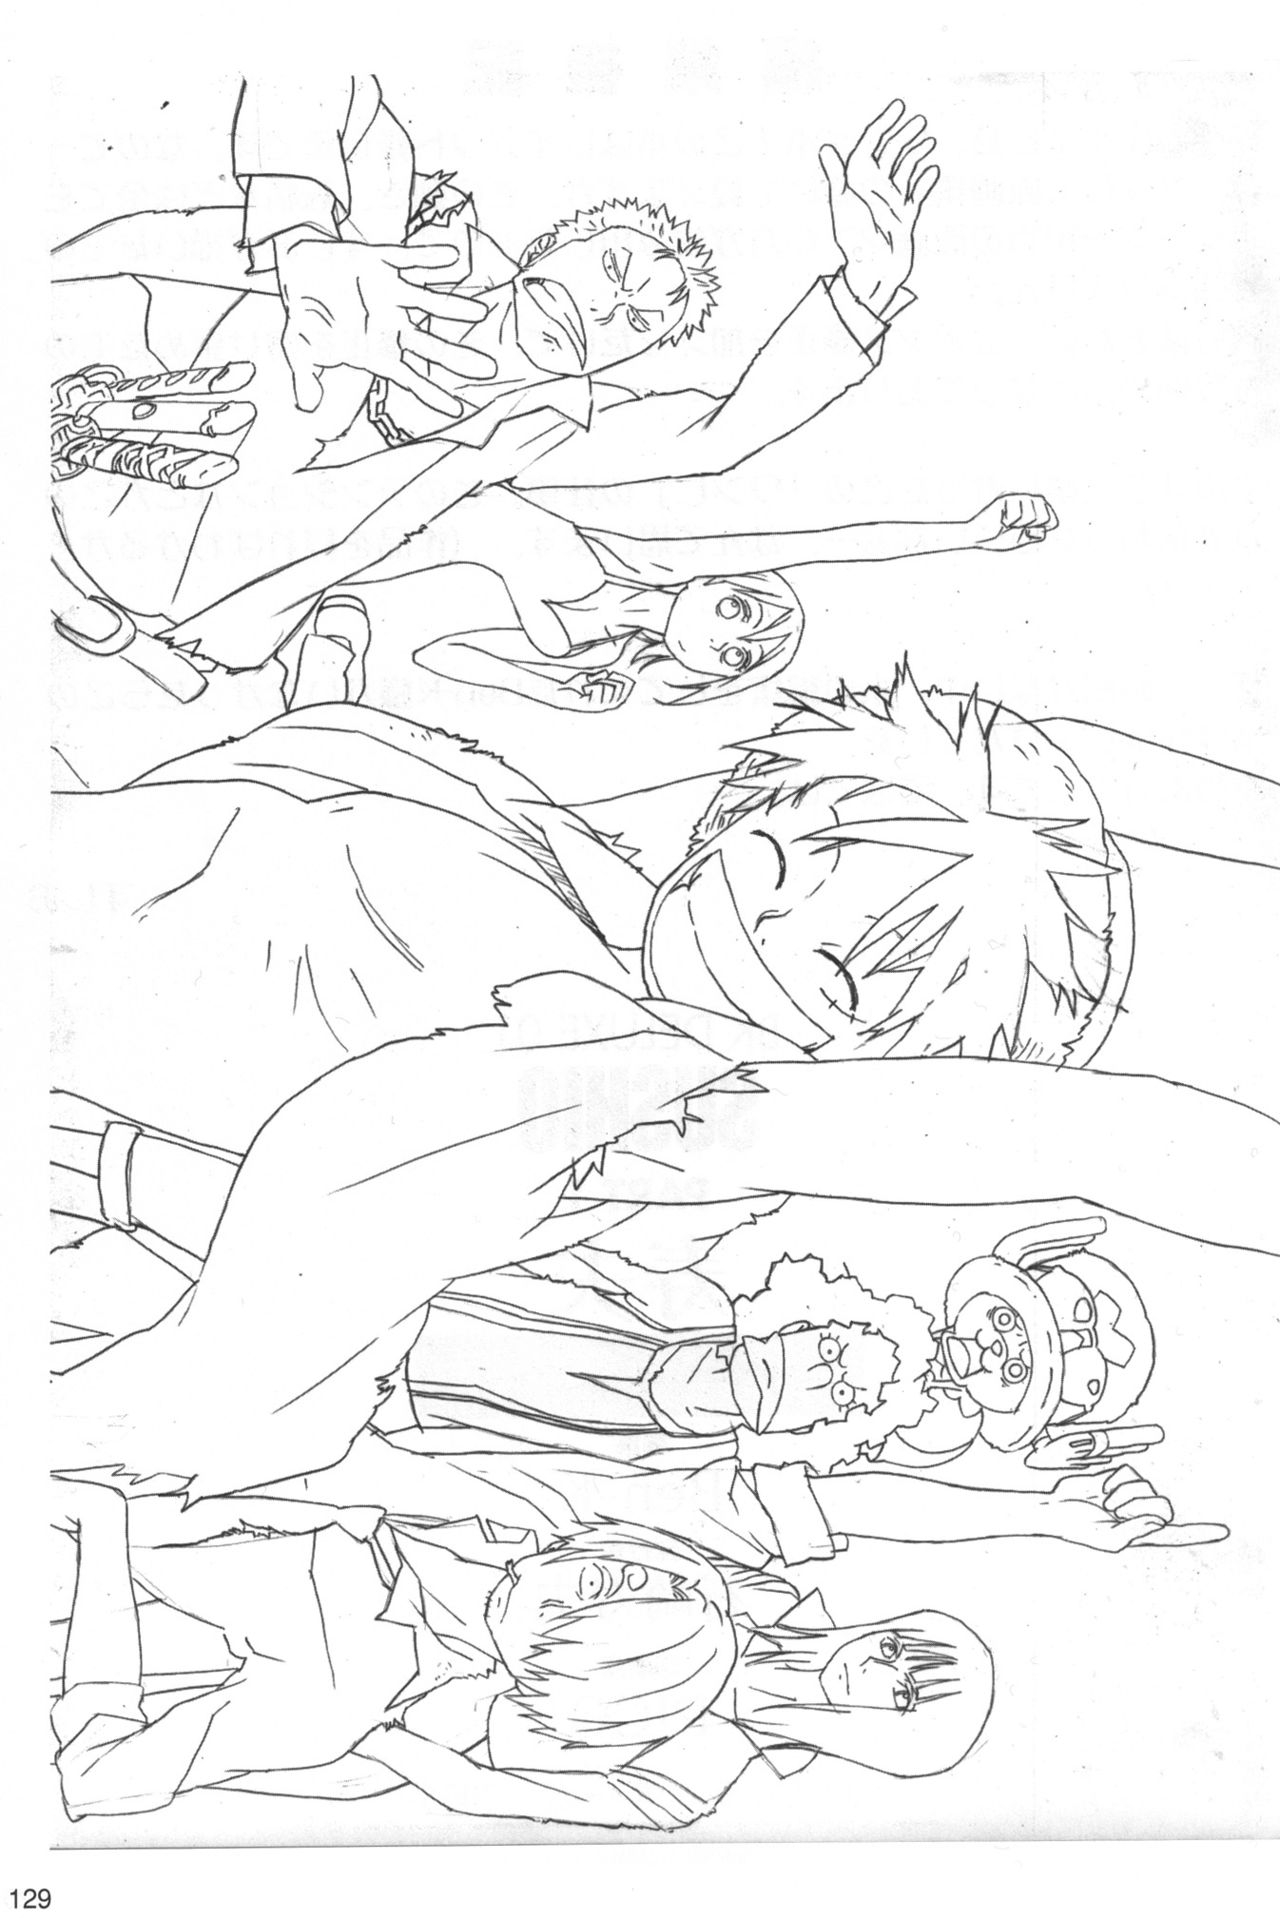 [Artbook] Sushio One Piece Movie 06 - Pencil Test and Design Book 127